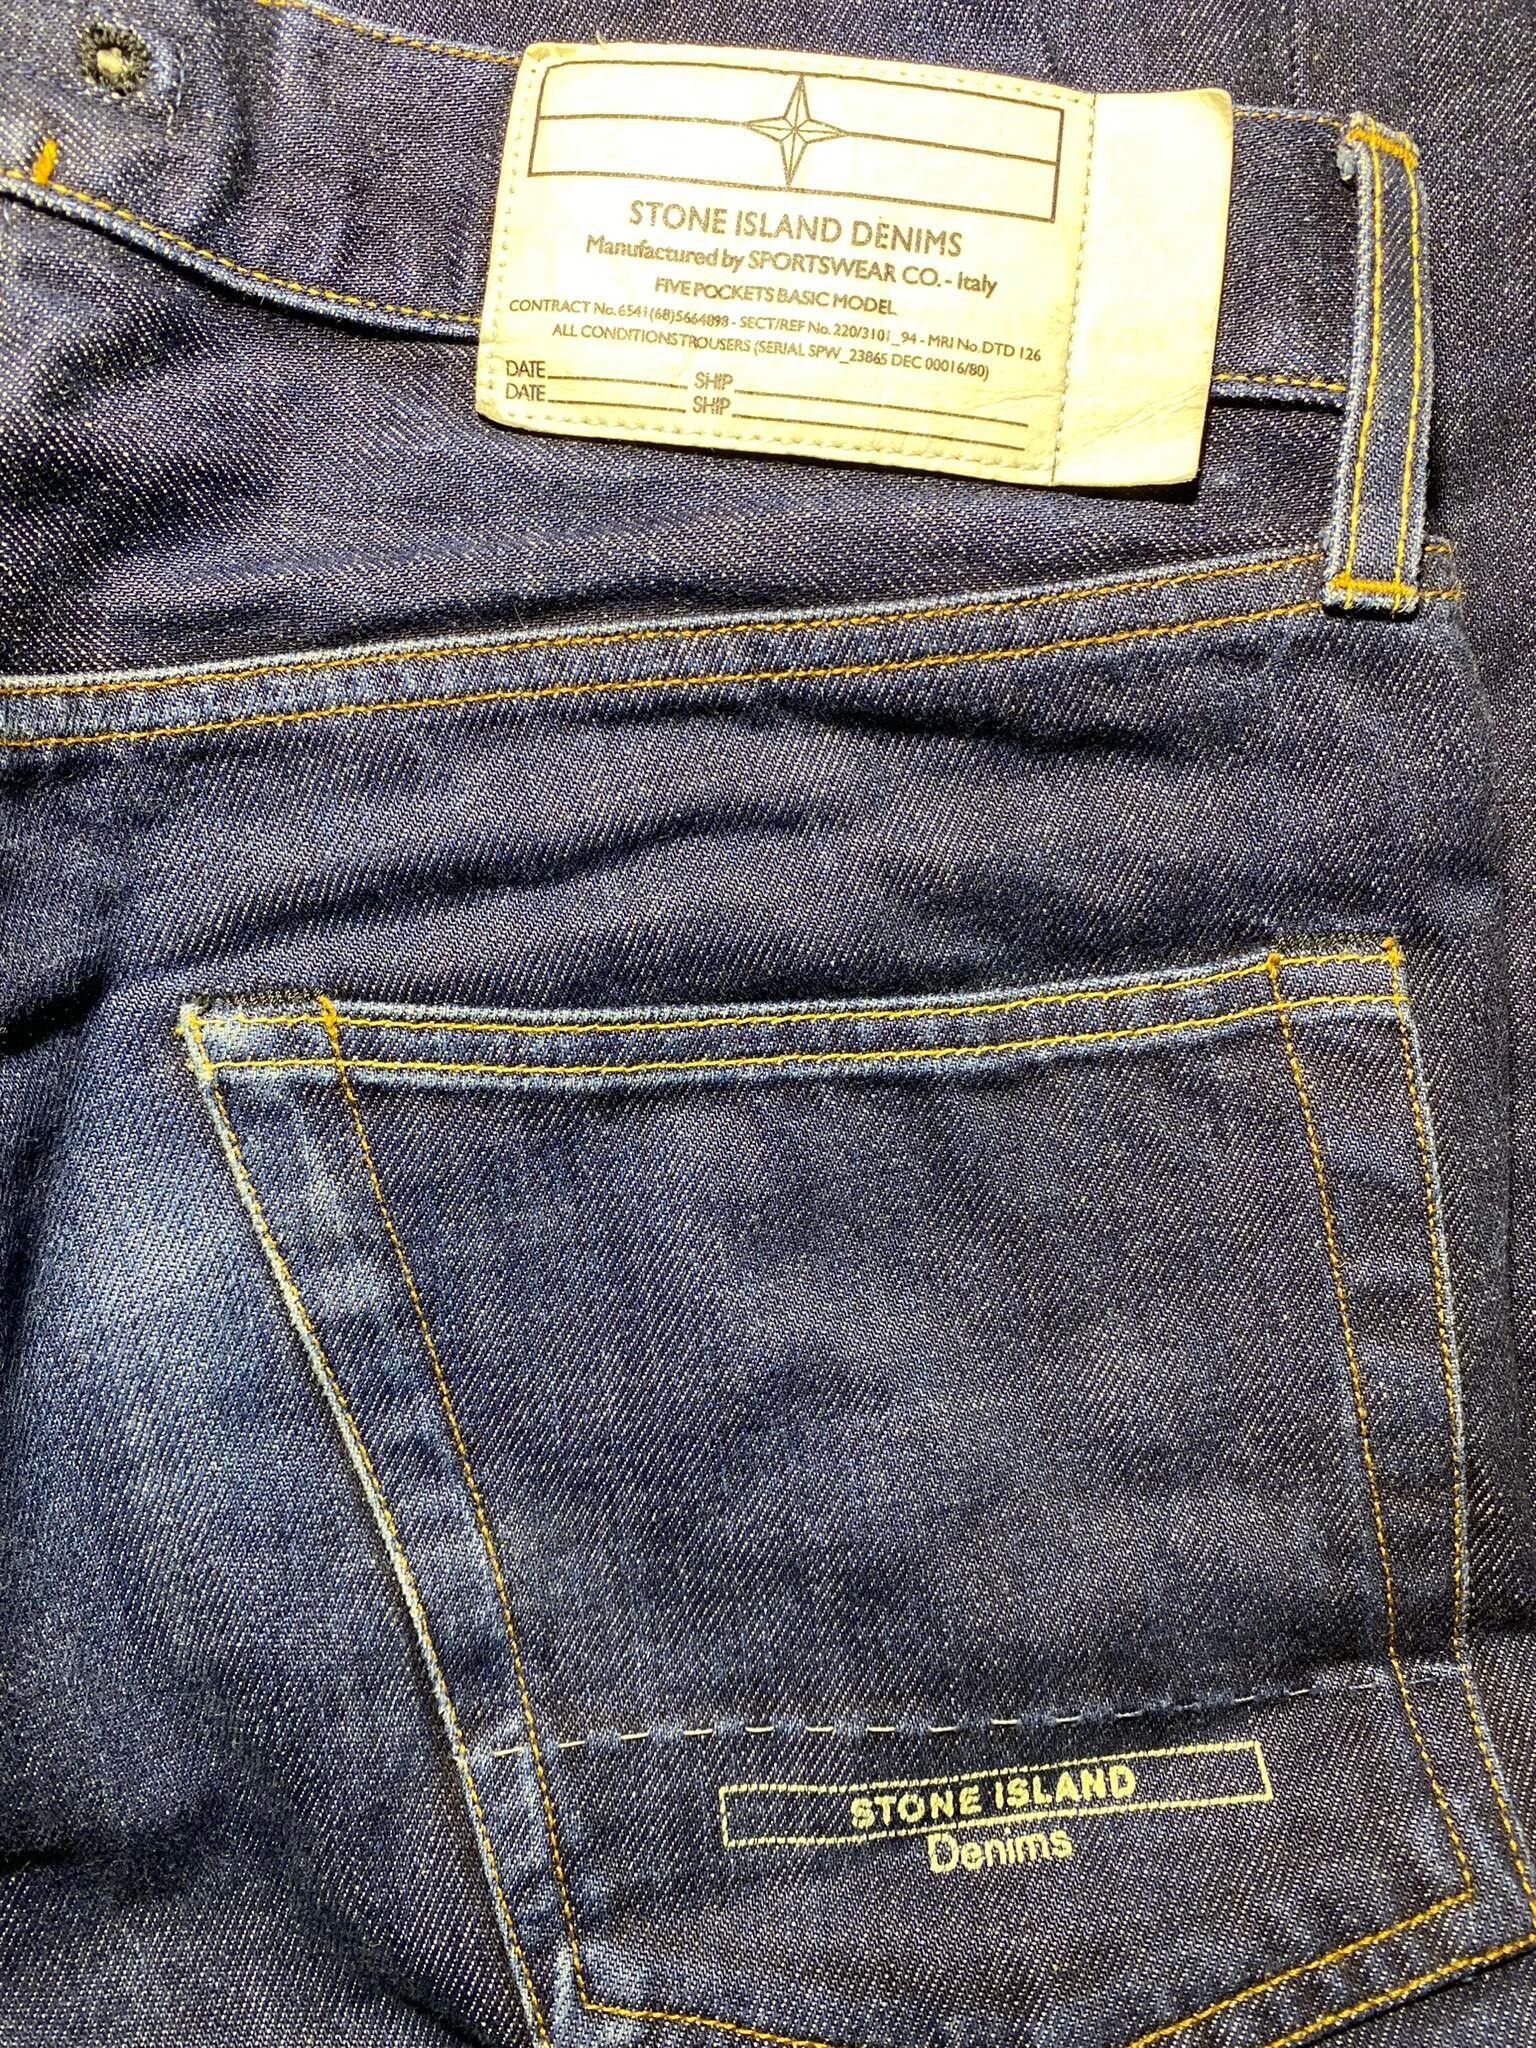 Stone Island Stone Island Denims Jeans Vintage Back Pocket Logo Size US 31 - 2 Preview